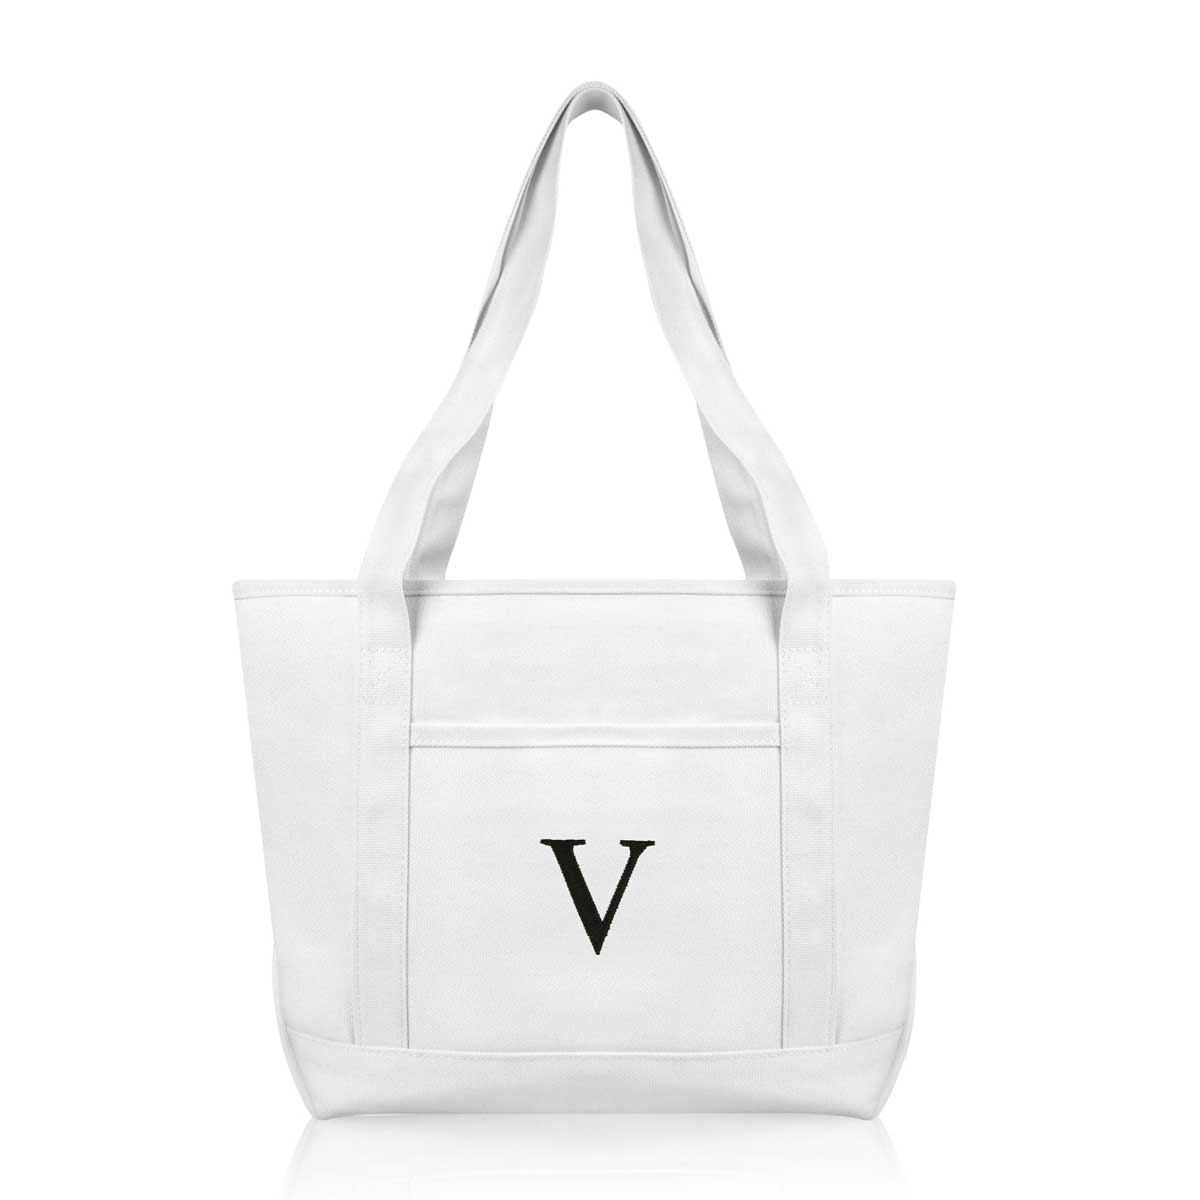 Dalix Medium Personalized Tote Bag Monogrammed Initial Letter - V